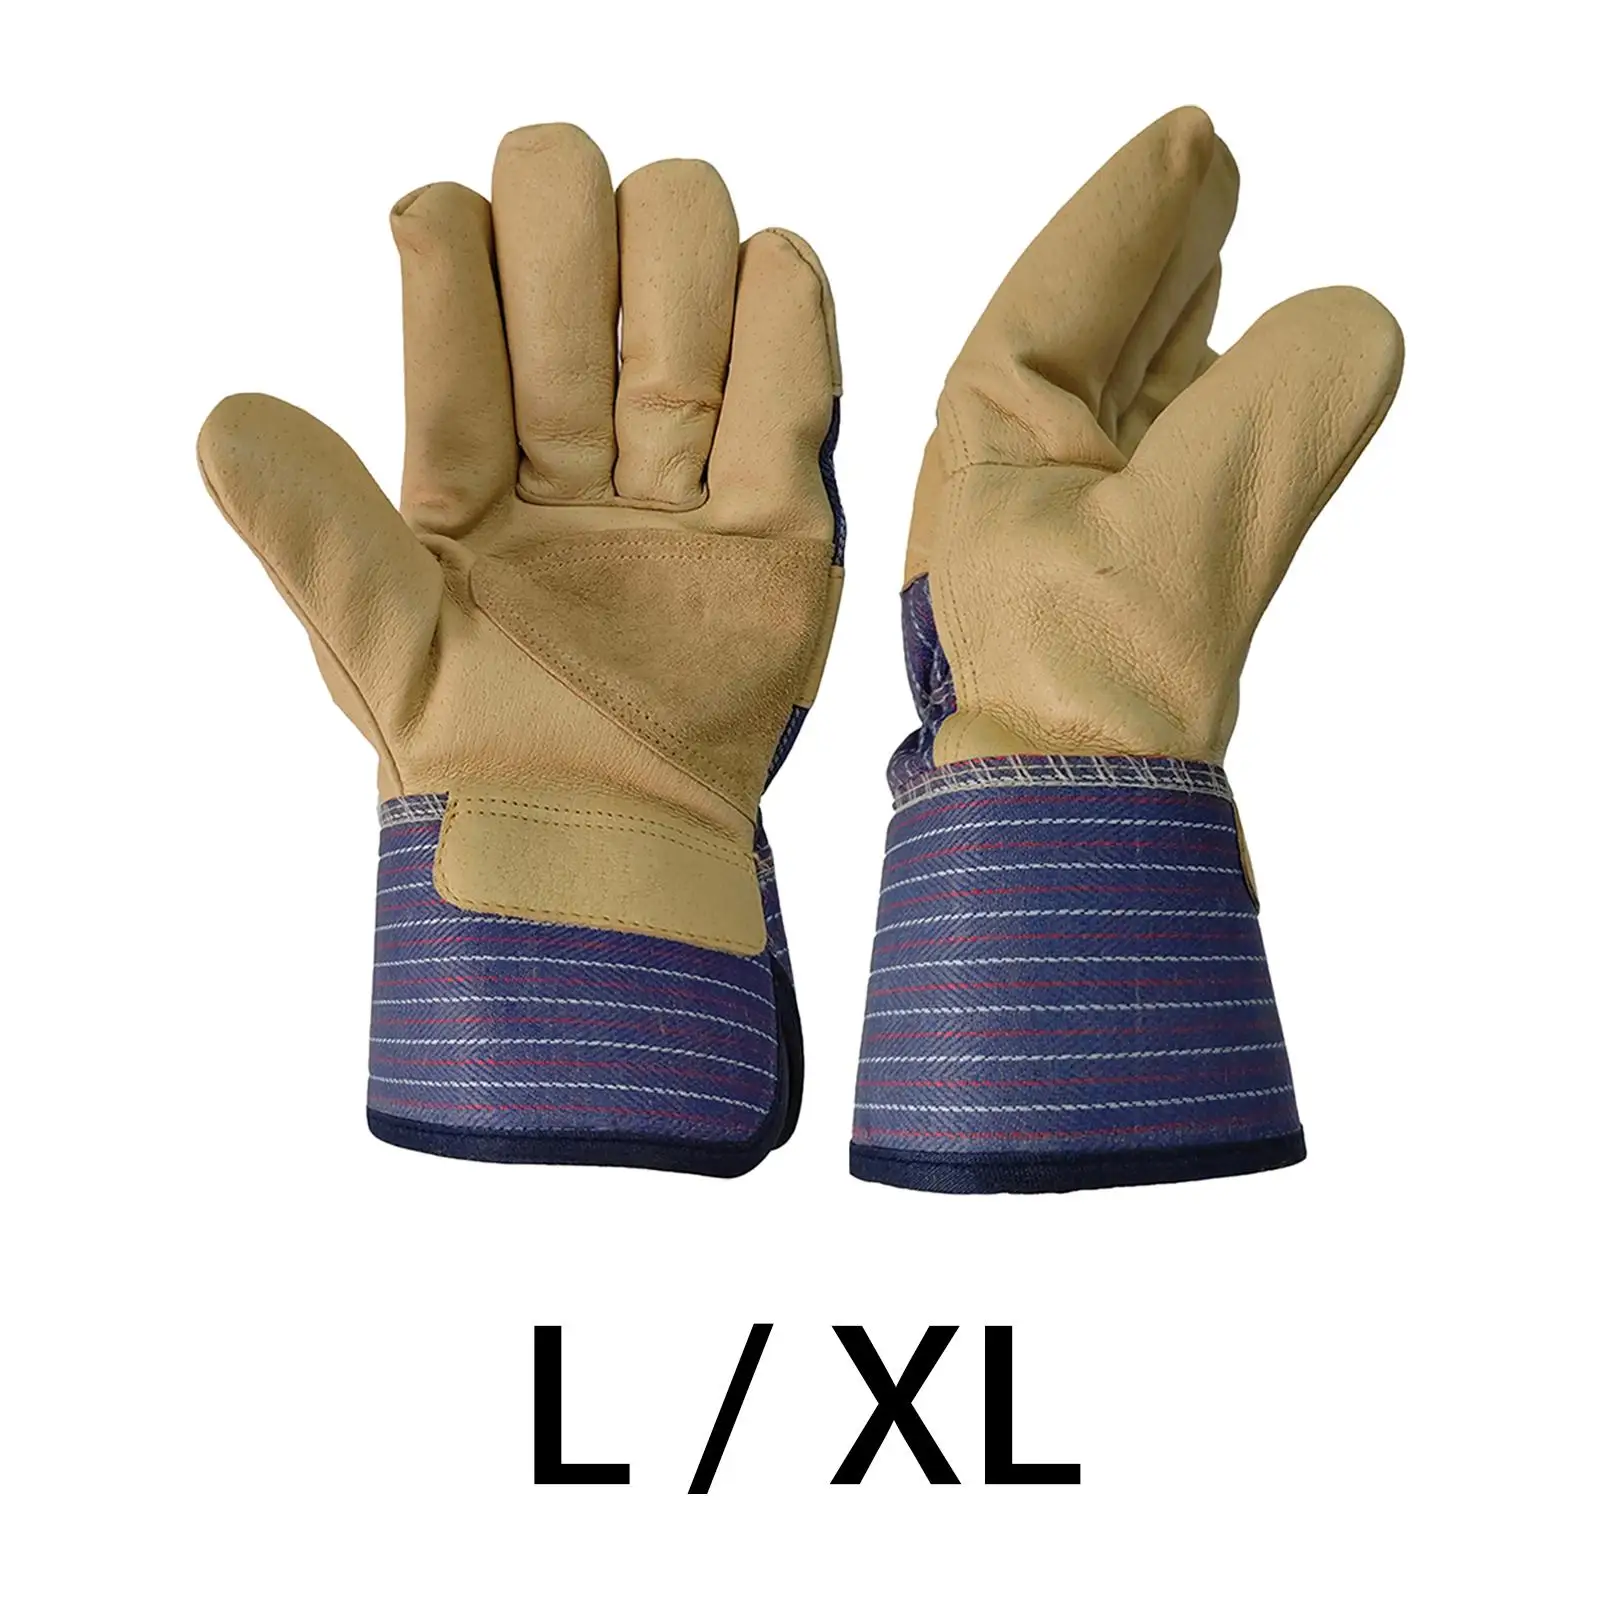 Welding Gloves Anti Slip Soft Flexible Durable Heavy Duty Heat Insulation Protective Gear for BBQ Pot Holder Furnace Warehouse